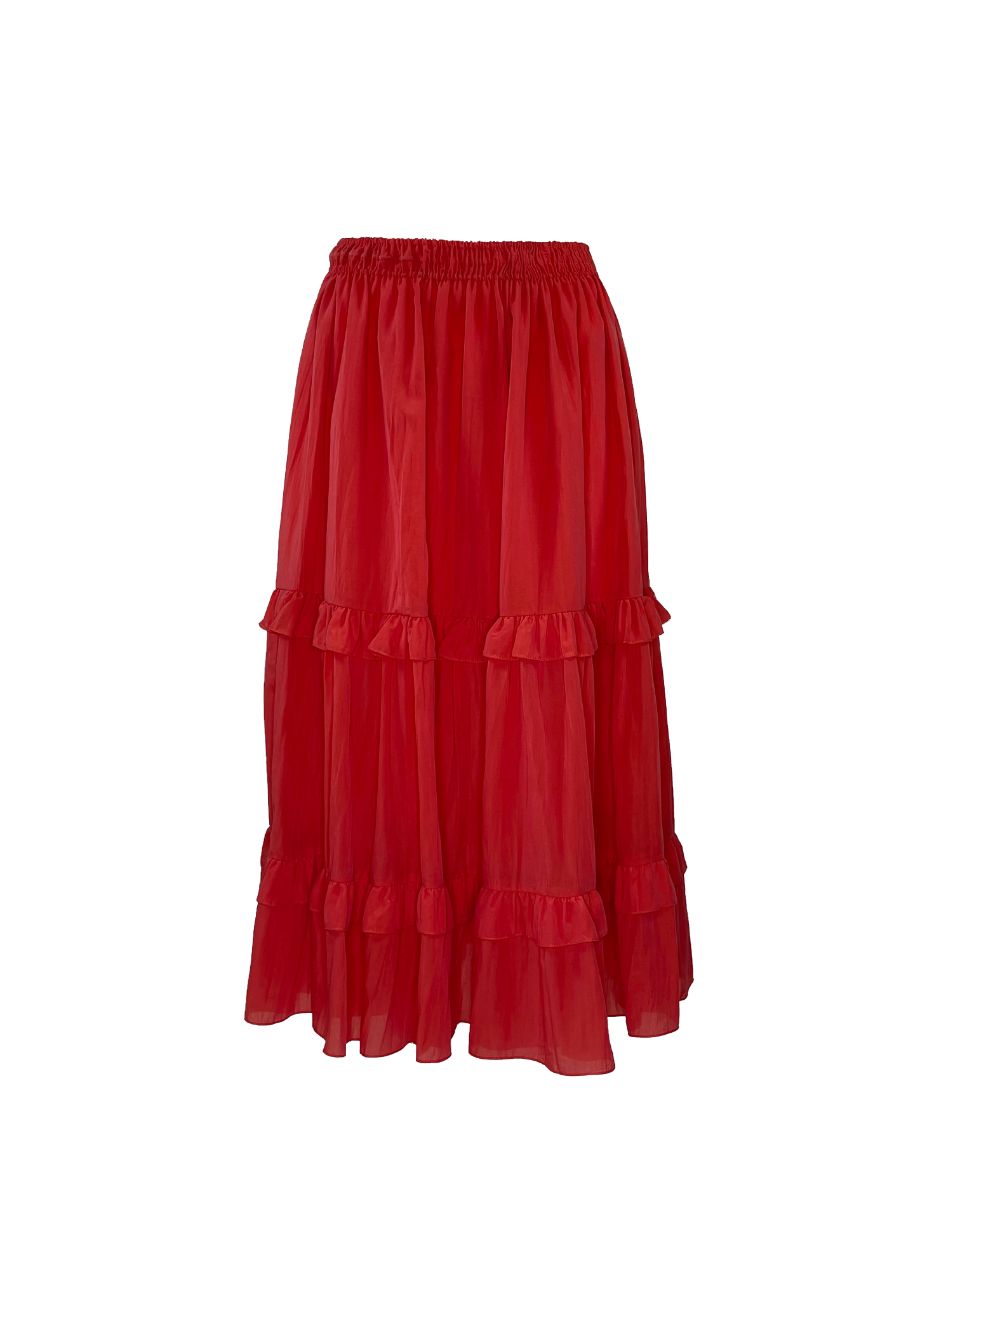 Aurora Mid Skirt by KonaCoco